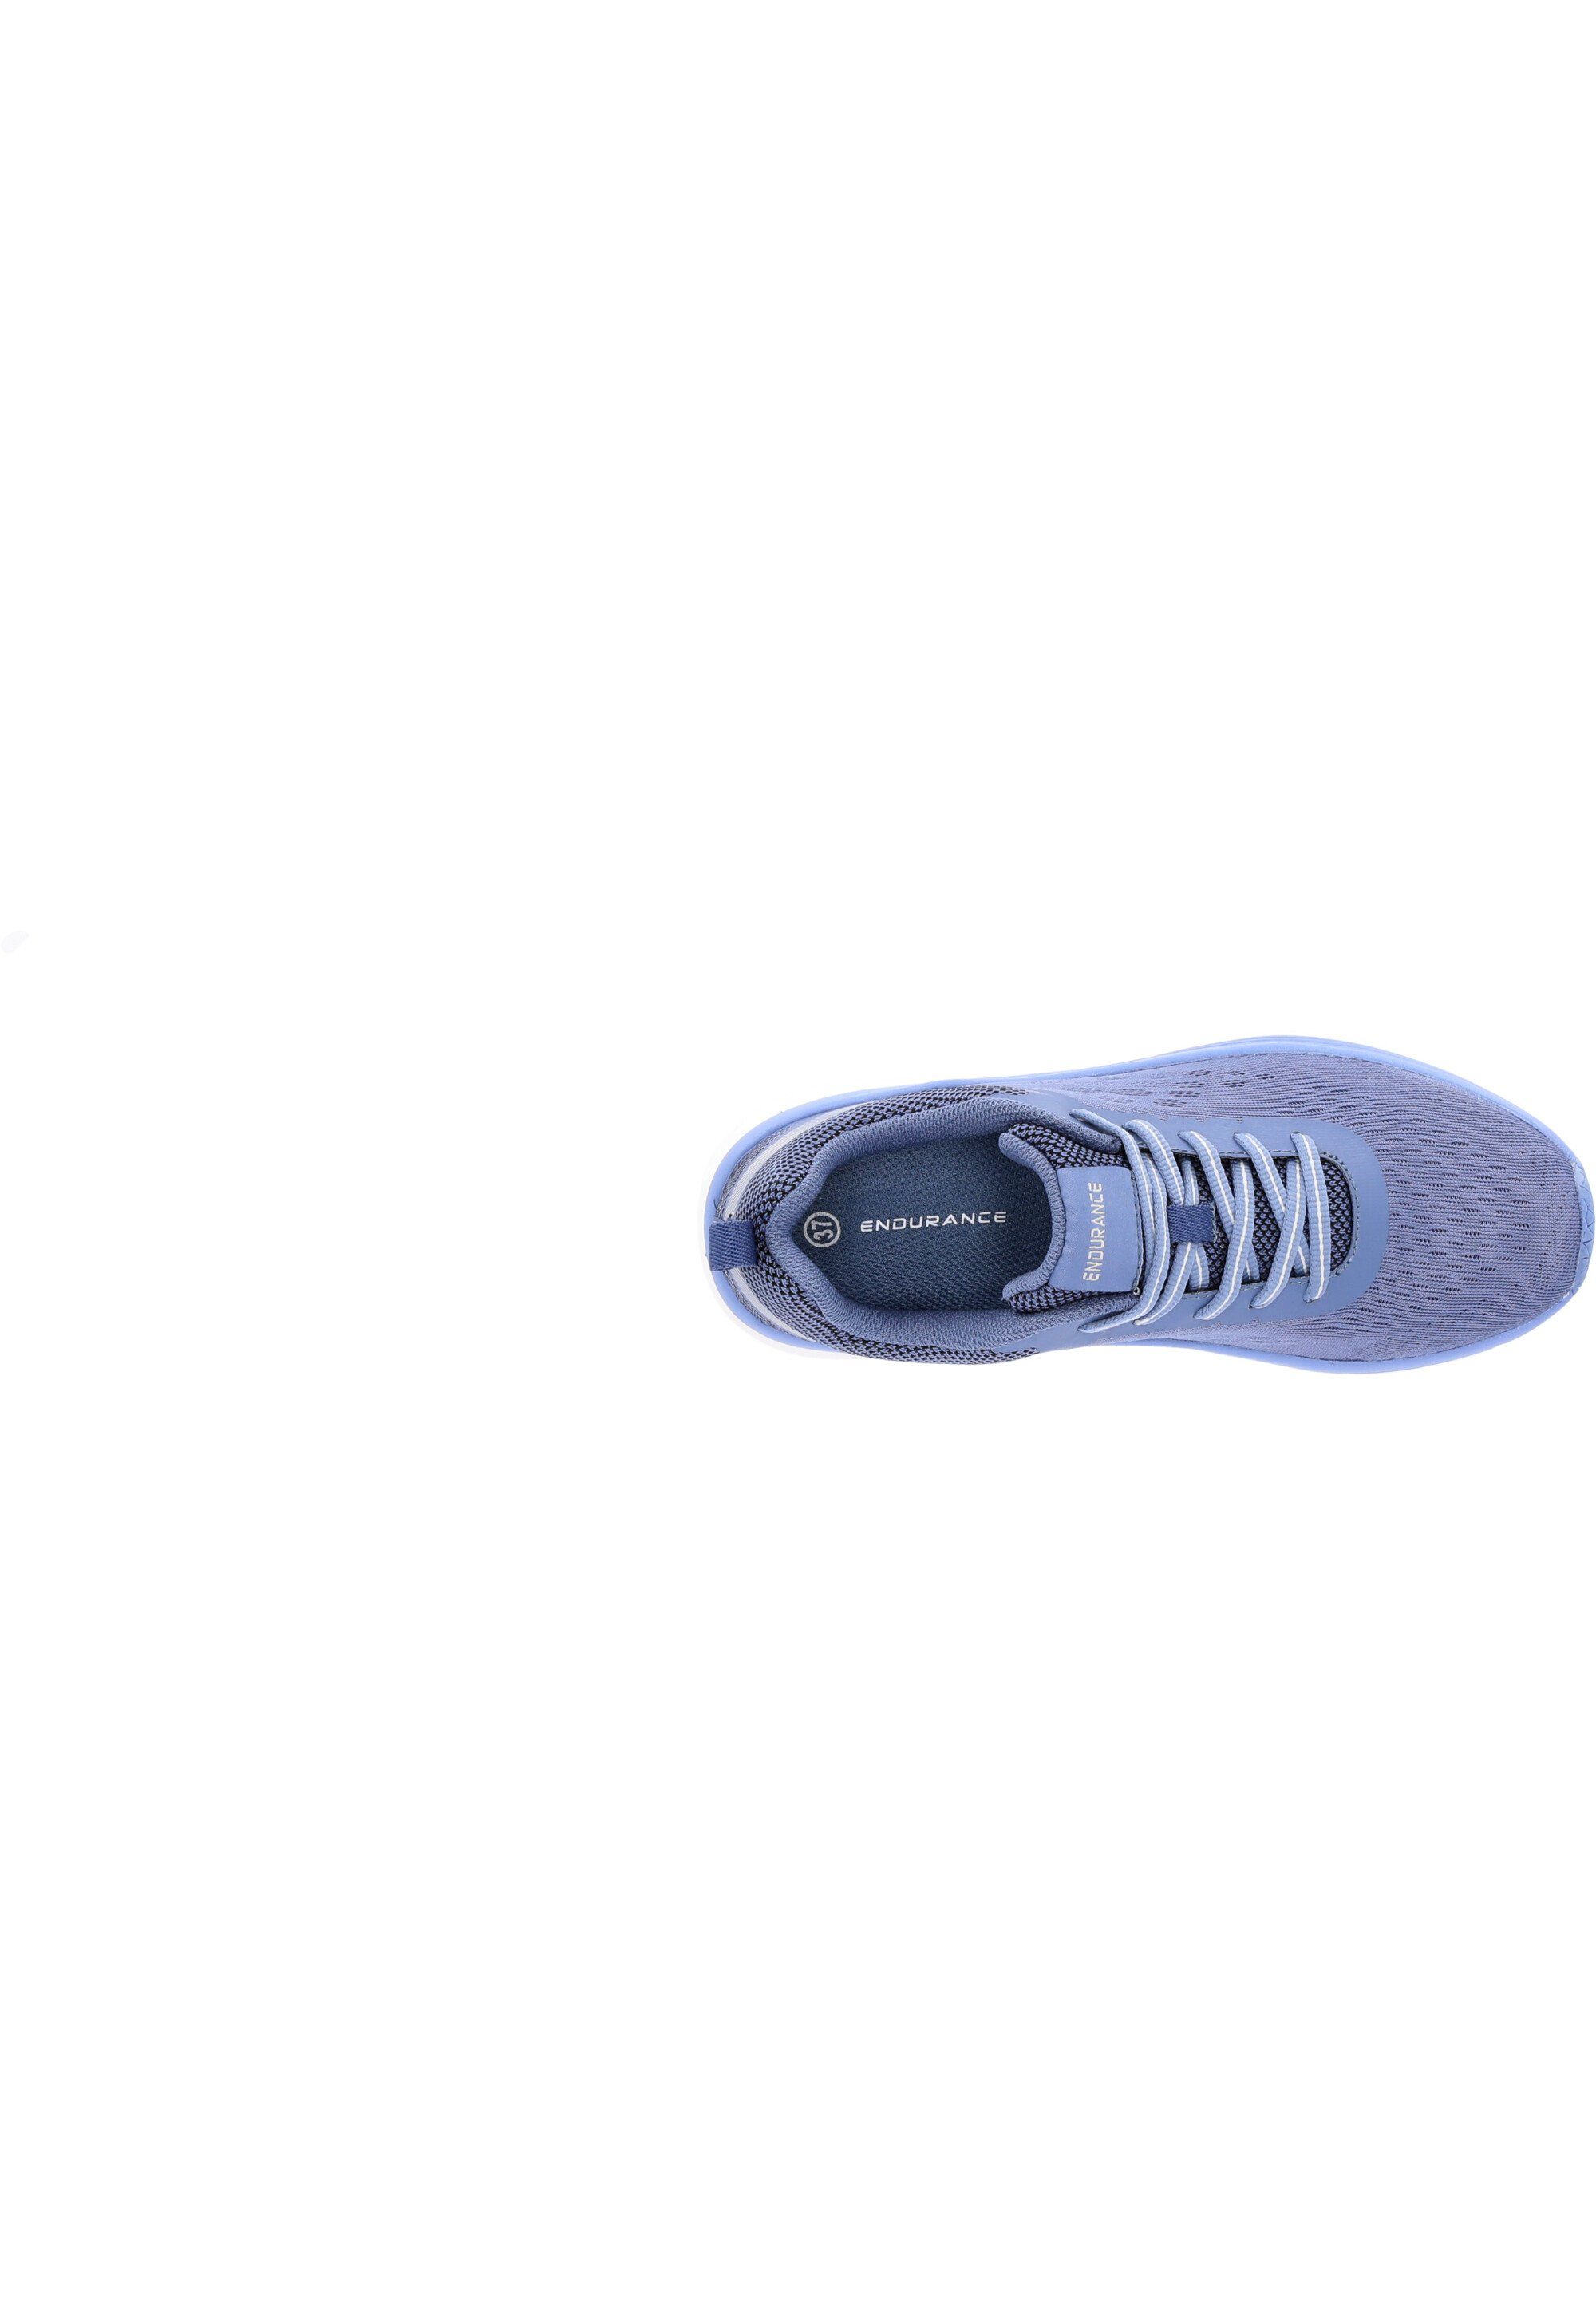 ENDURANCE Fortlian Sneaker mit blau komfortabler Dämpfung